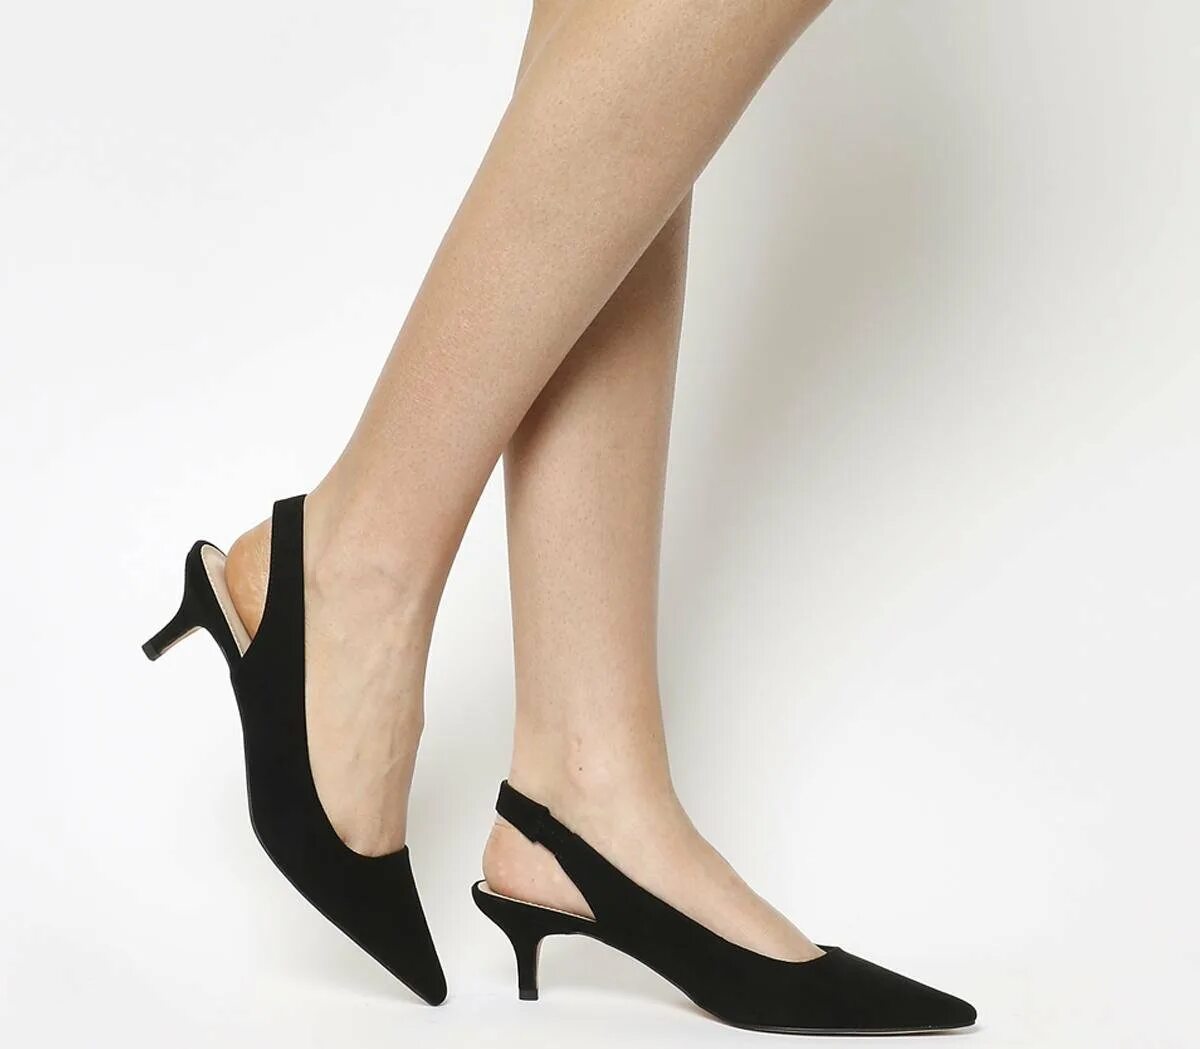 Киттен хилл. Туфли Киттен Хилл. Туфли на каблуке Киттен Хиллс. Обувь с каблуком Киттен Хилл. Slingback Kitten Heel Shoes Black.